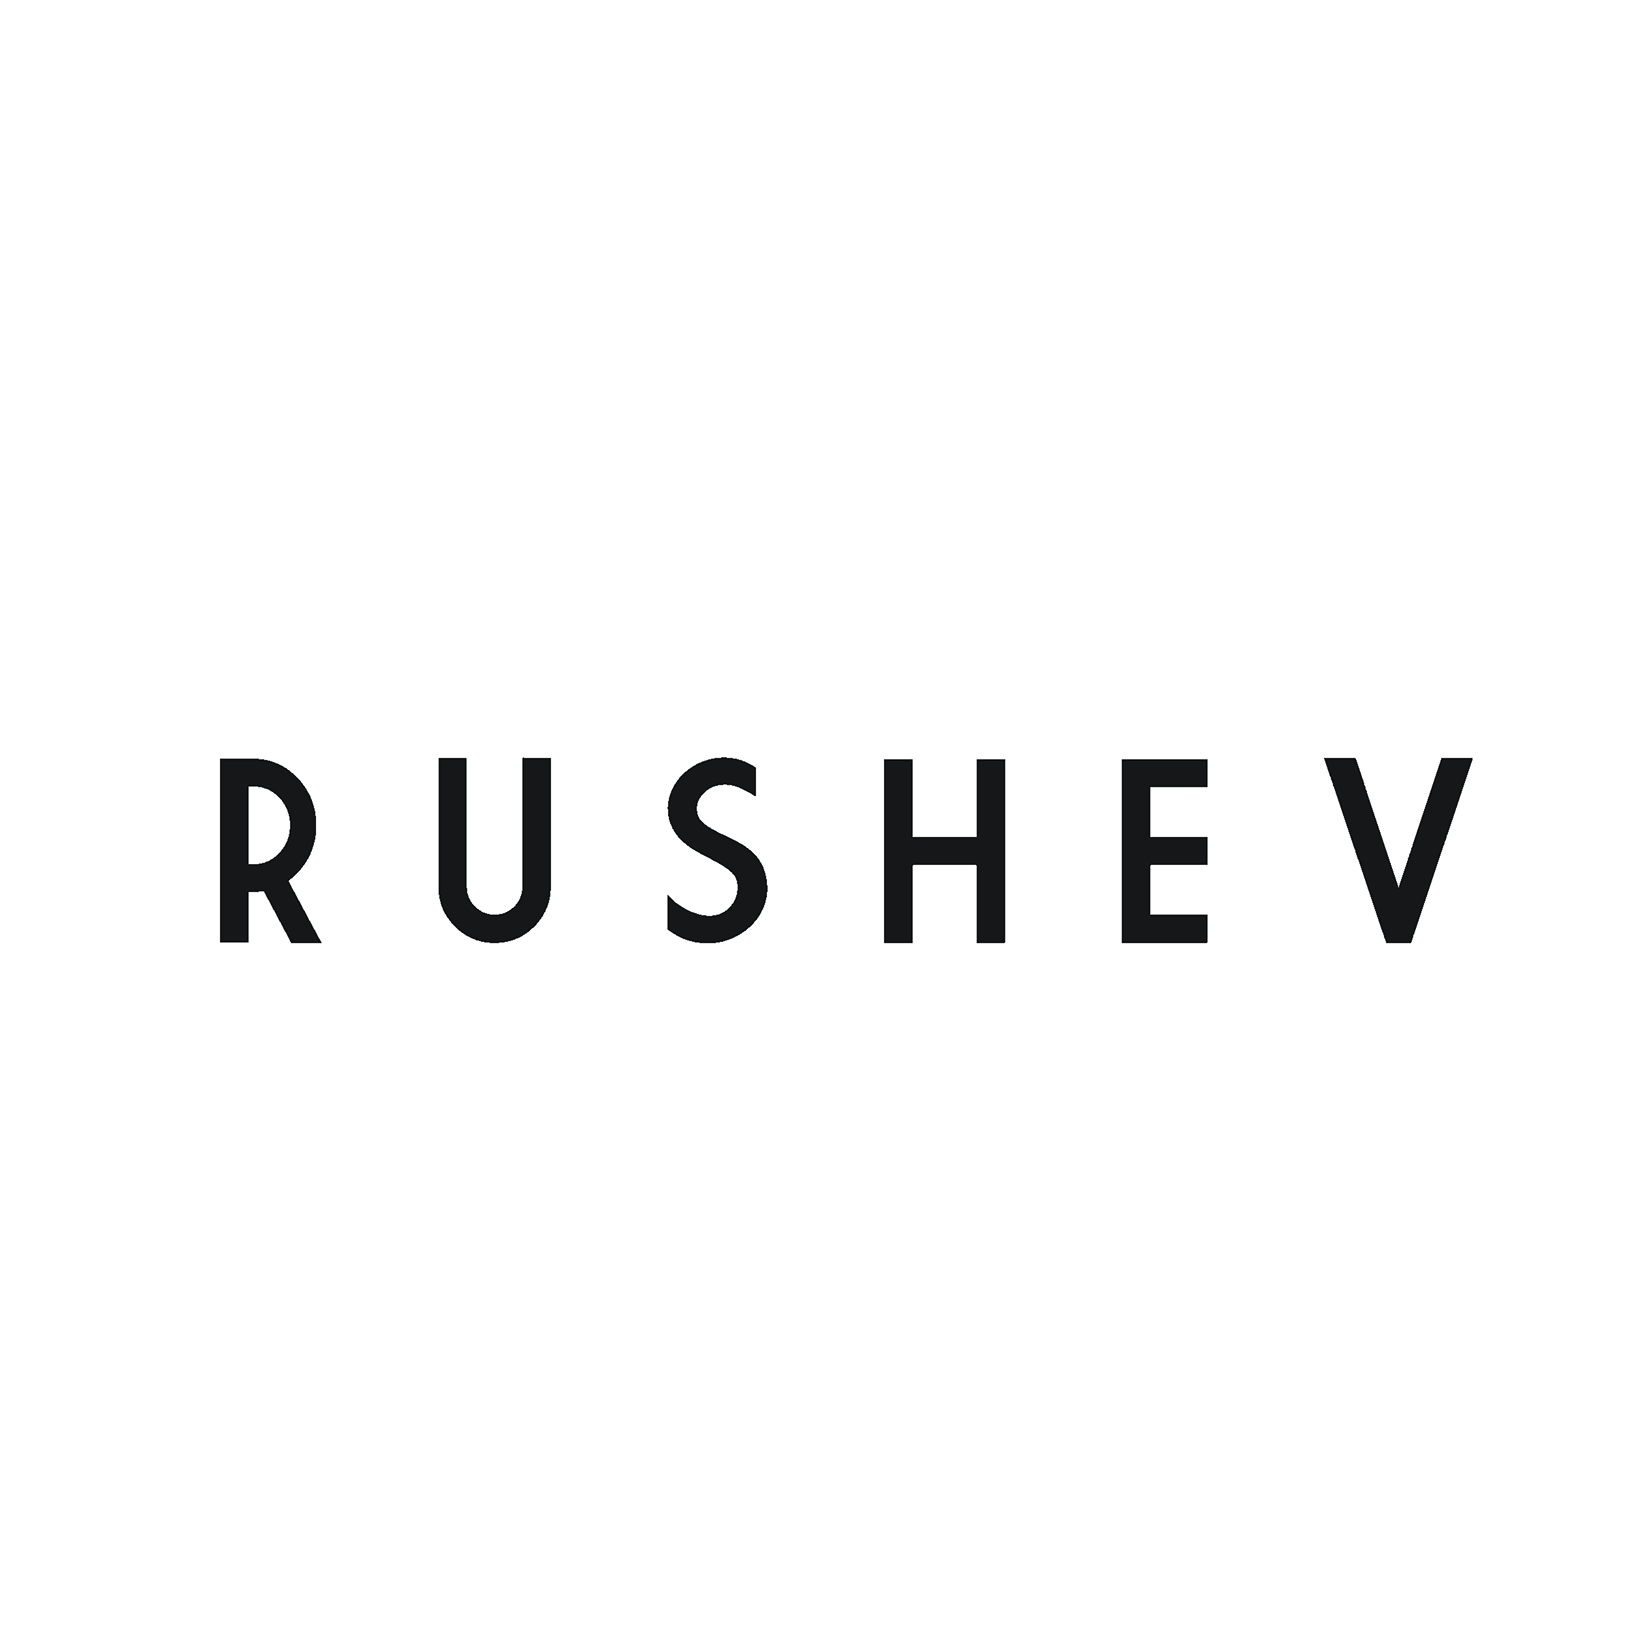 RUSHEV